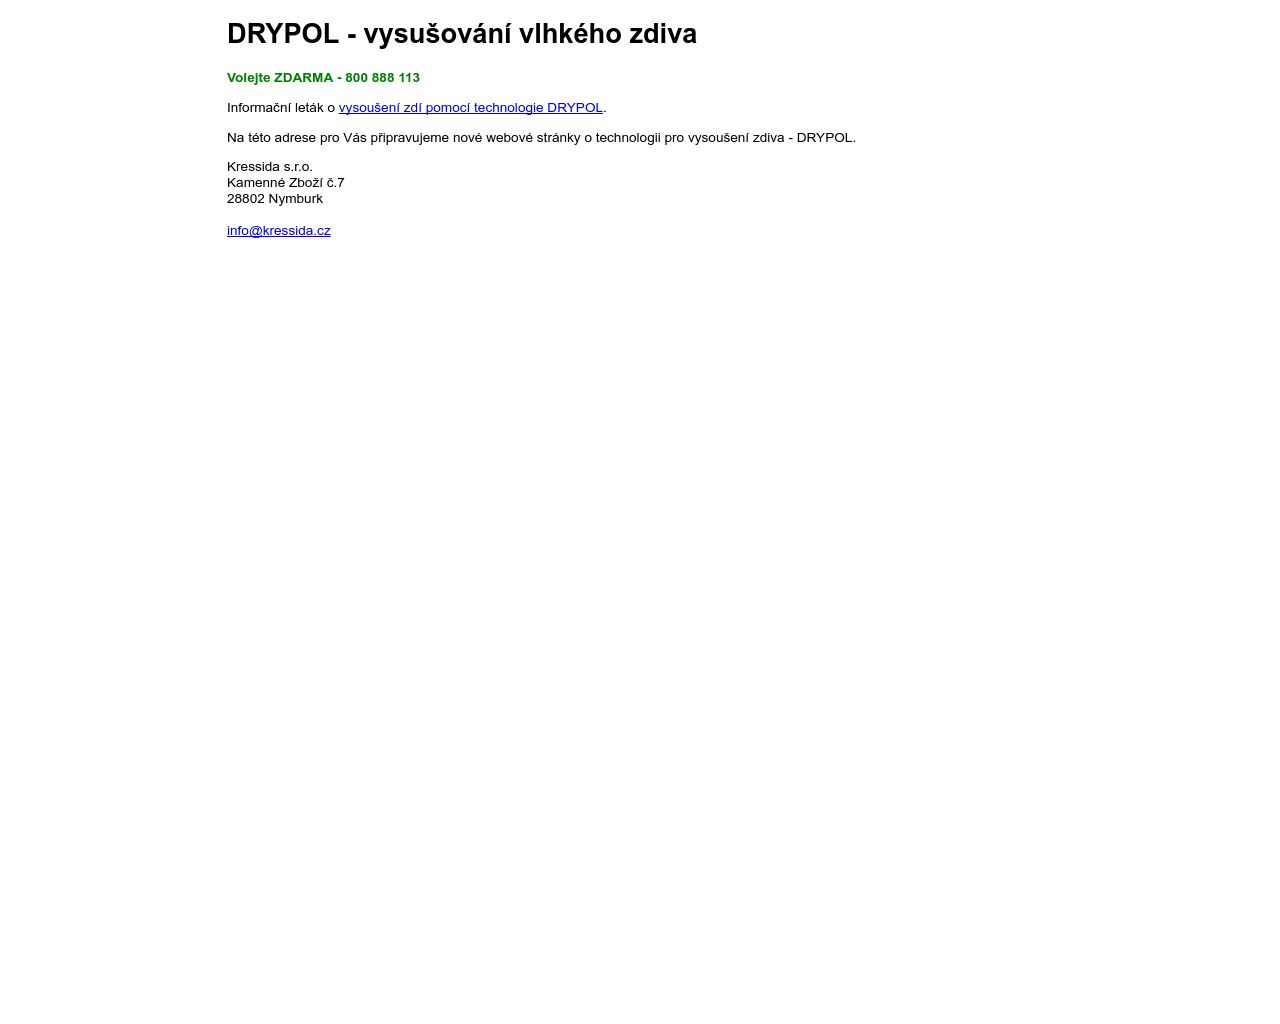 Site Image drypol.cz v 1280x1024